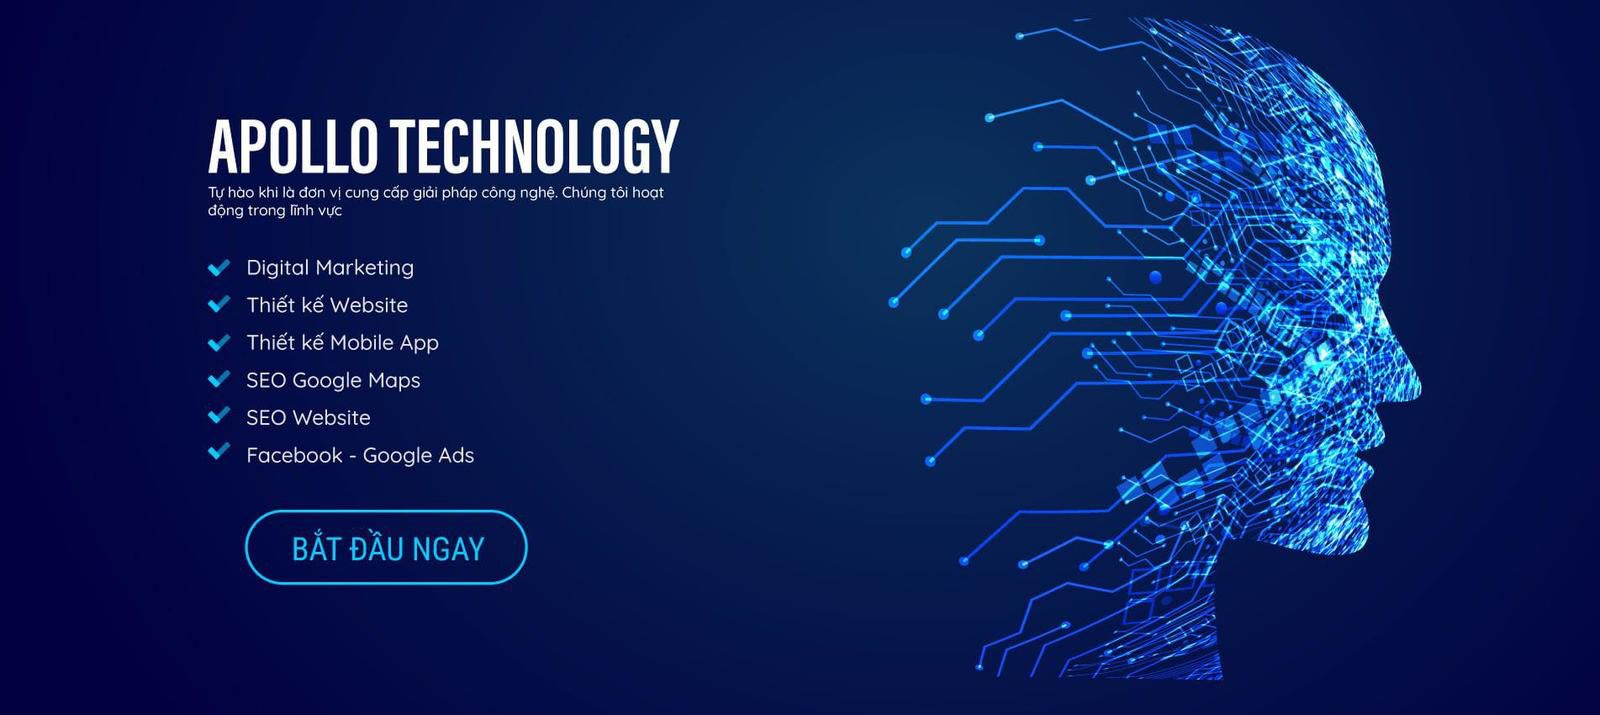 Thiết kế web chuẩn seo, Dịch vụ SEO tpHcm Apollo Technology Solutions